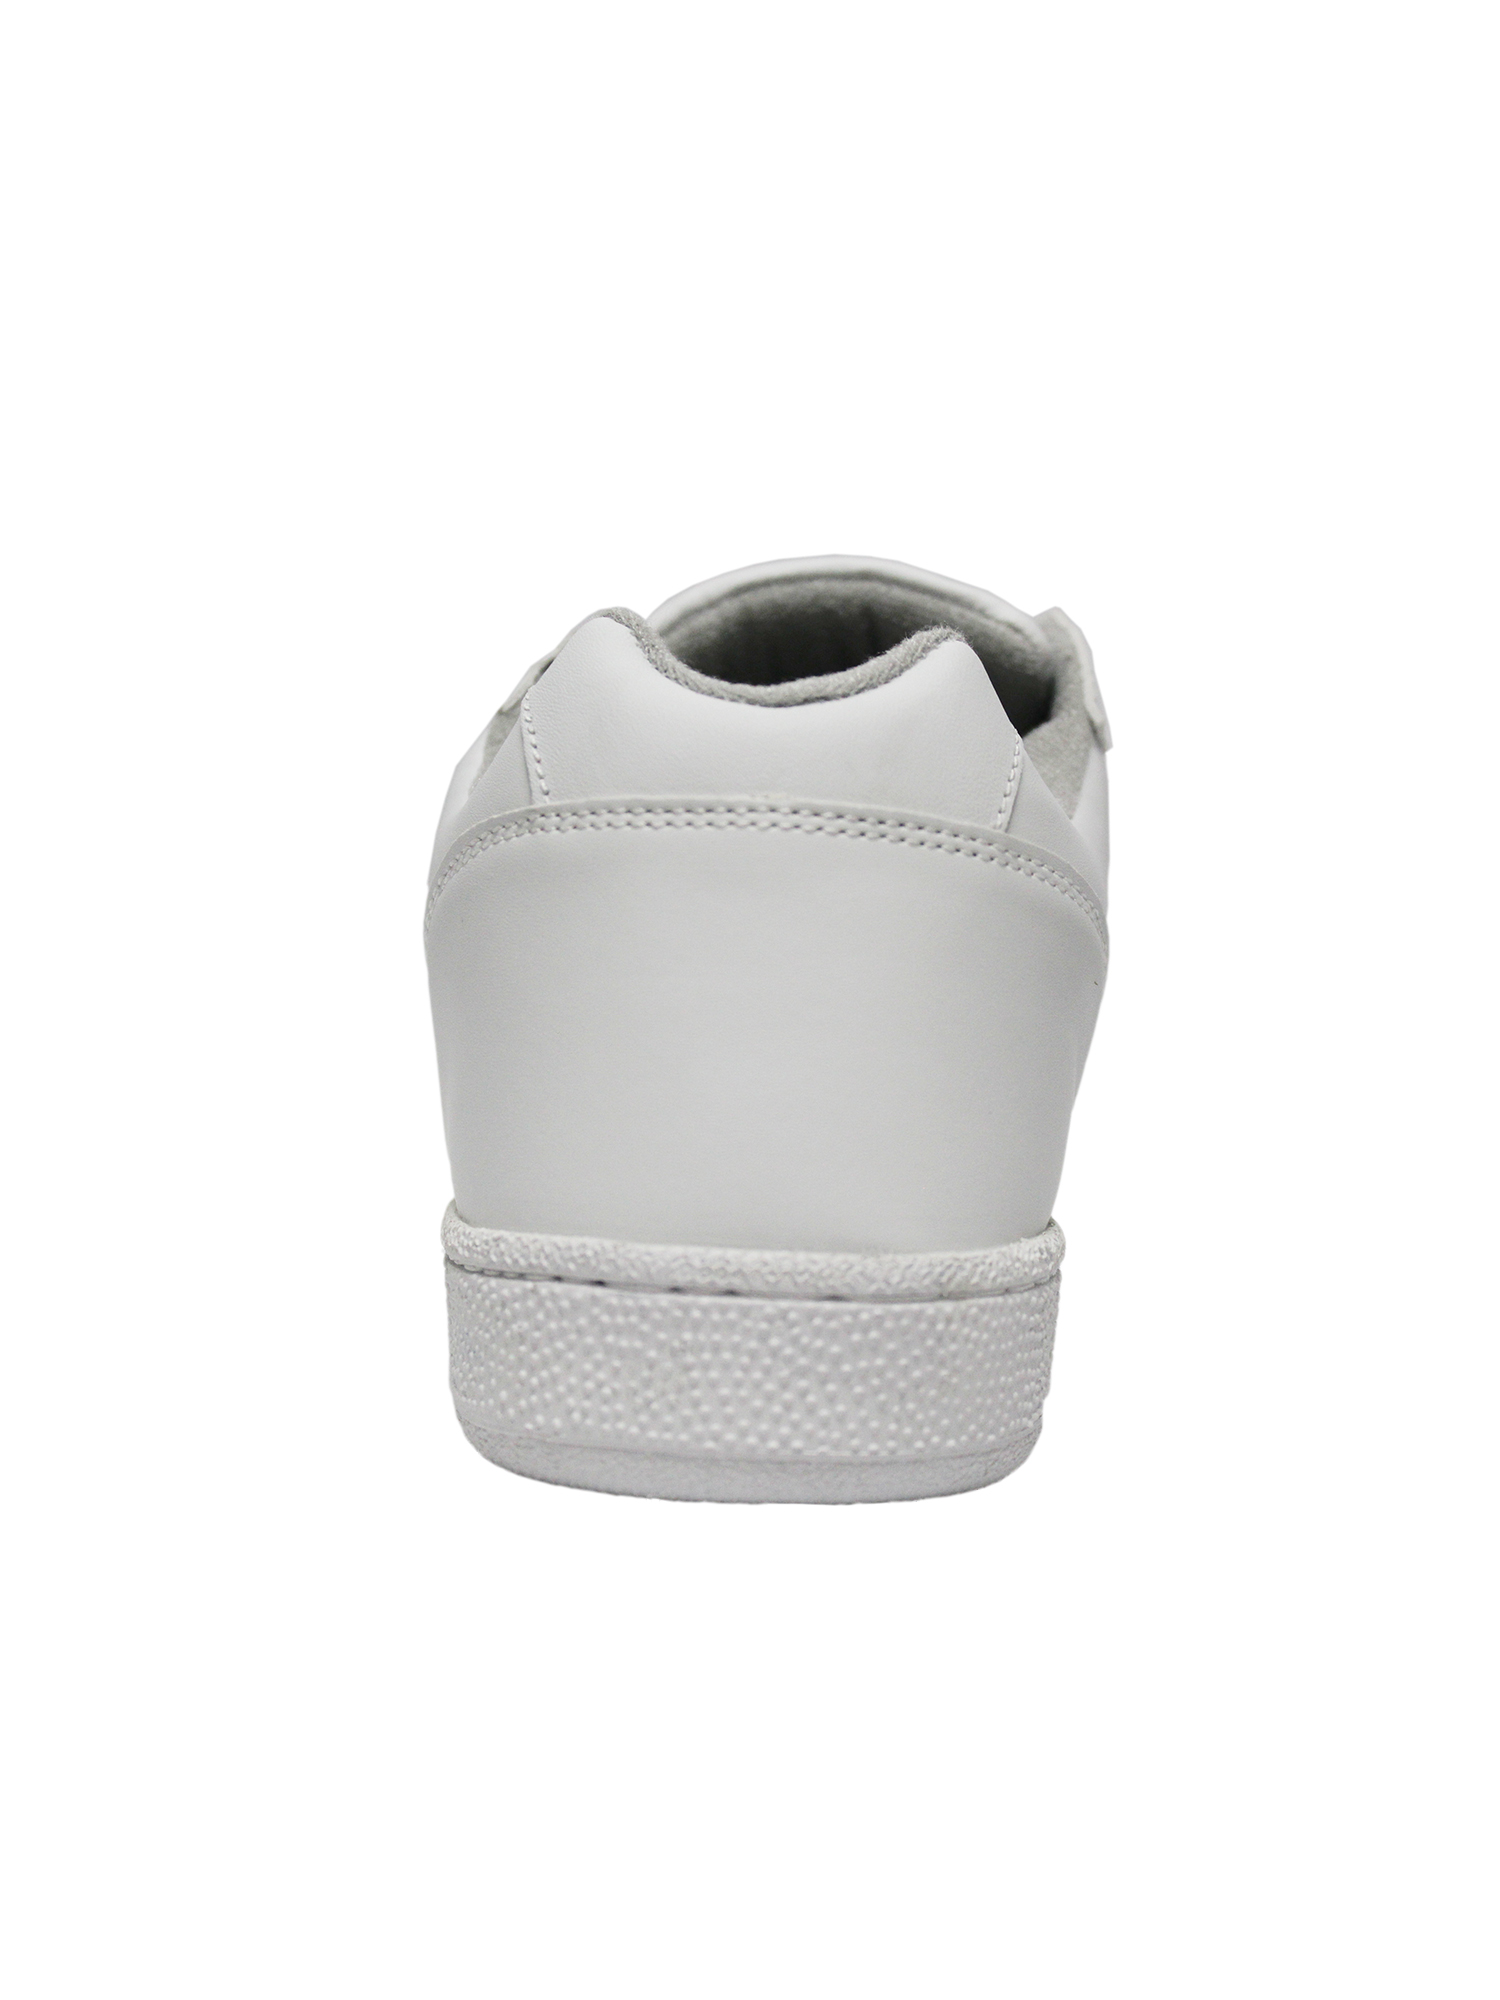 Tanleewa Men's Leather Strap Sneakers Lightweight Hook and Loop Walking Shoe Size 9 Adult Male - image 5 of 5